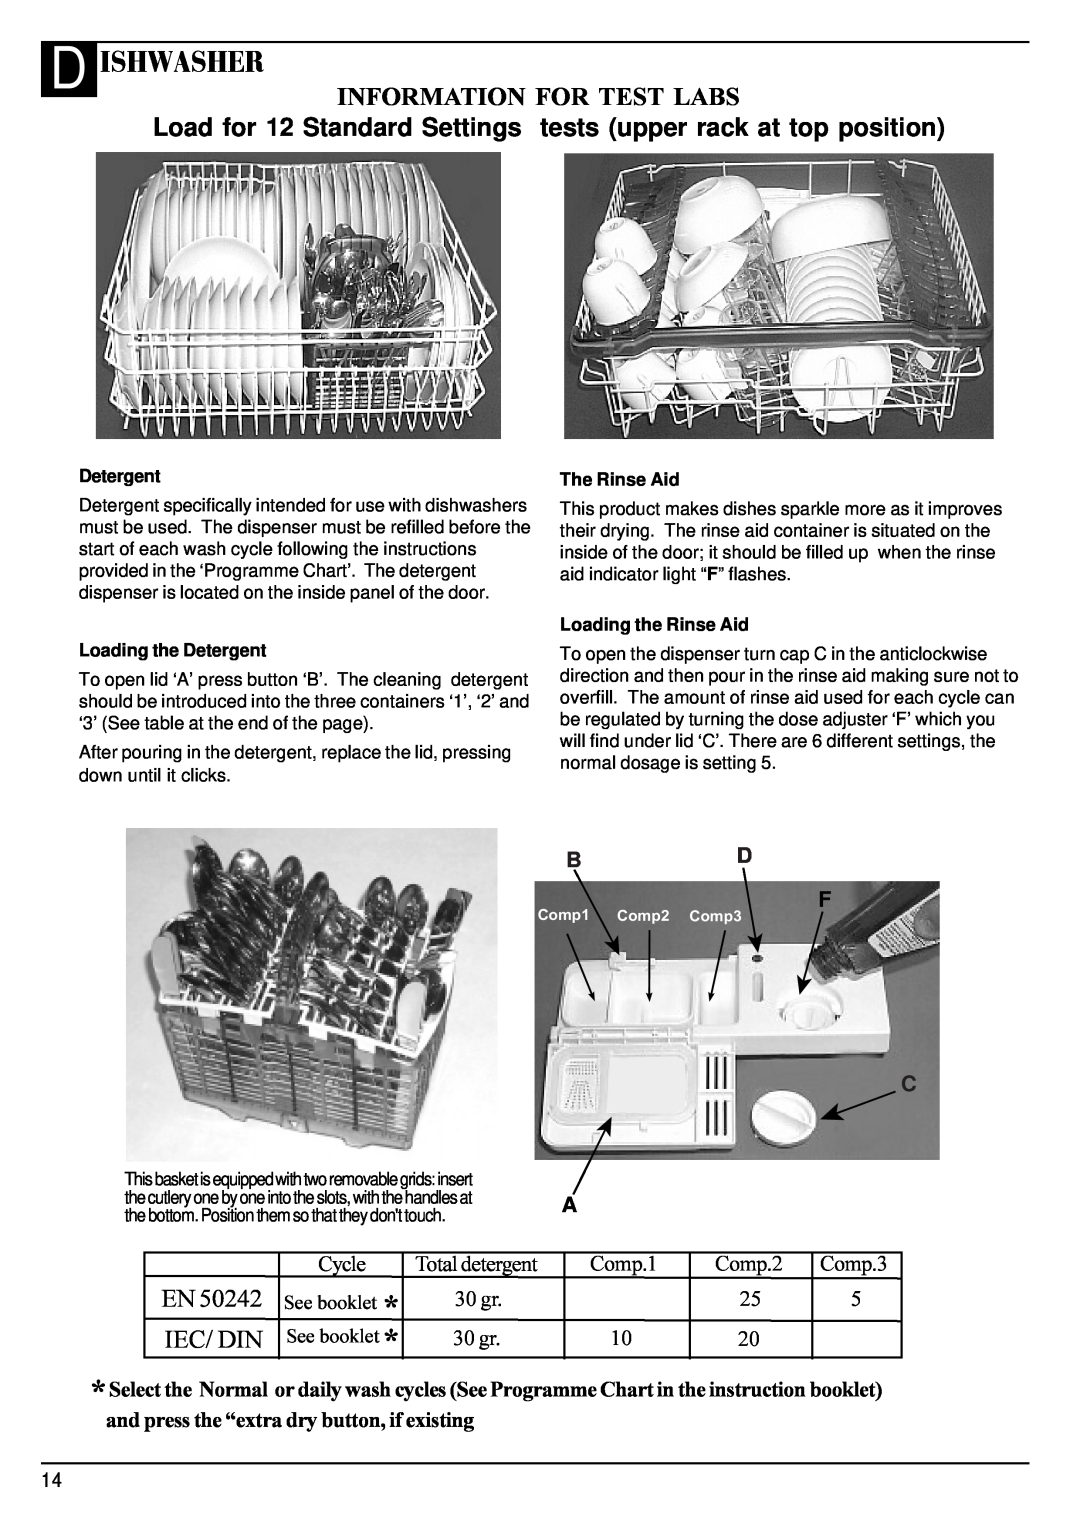 Hotpoint BFT68 Load for 12 Standard Settings tests upper rack at top position, D Ishwasher, Information For Test Labs 